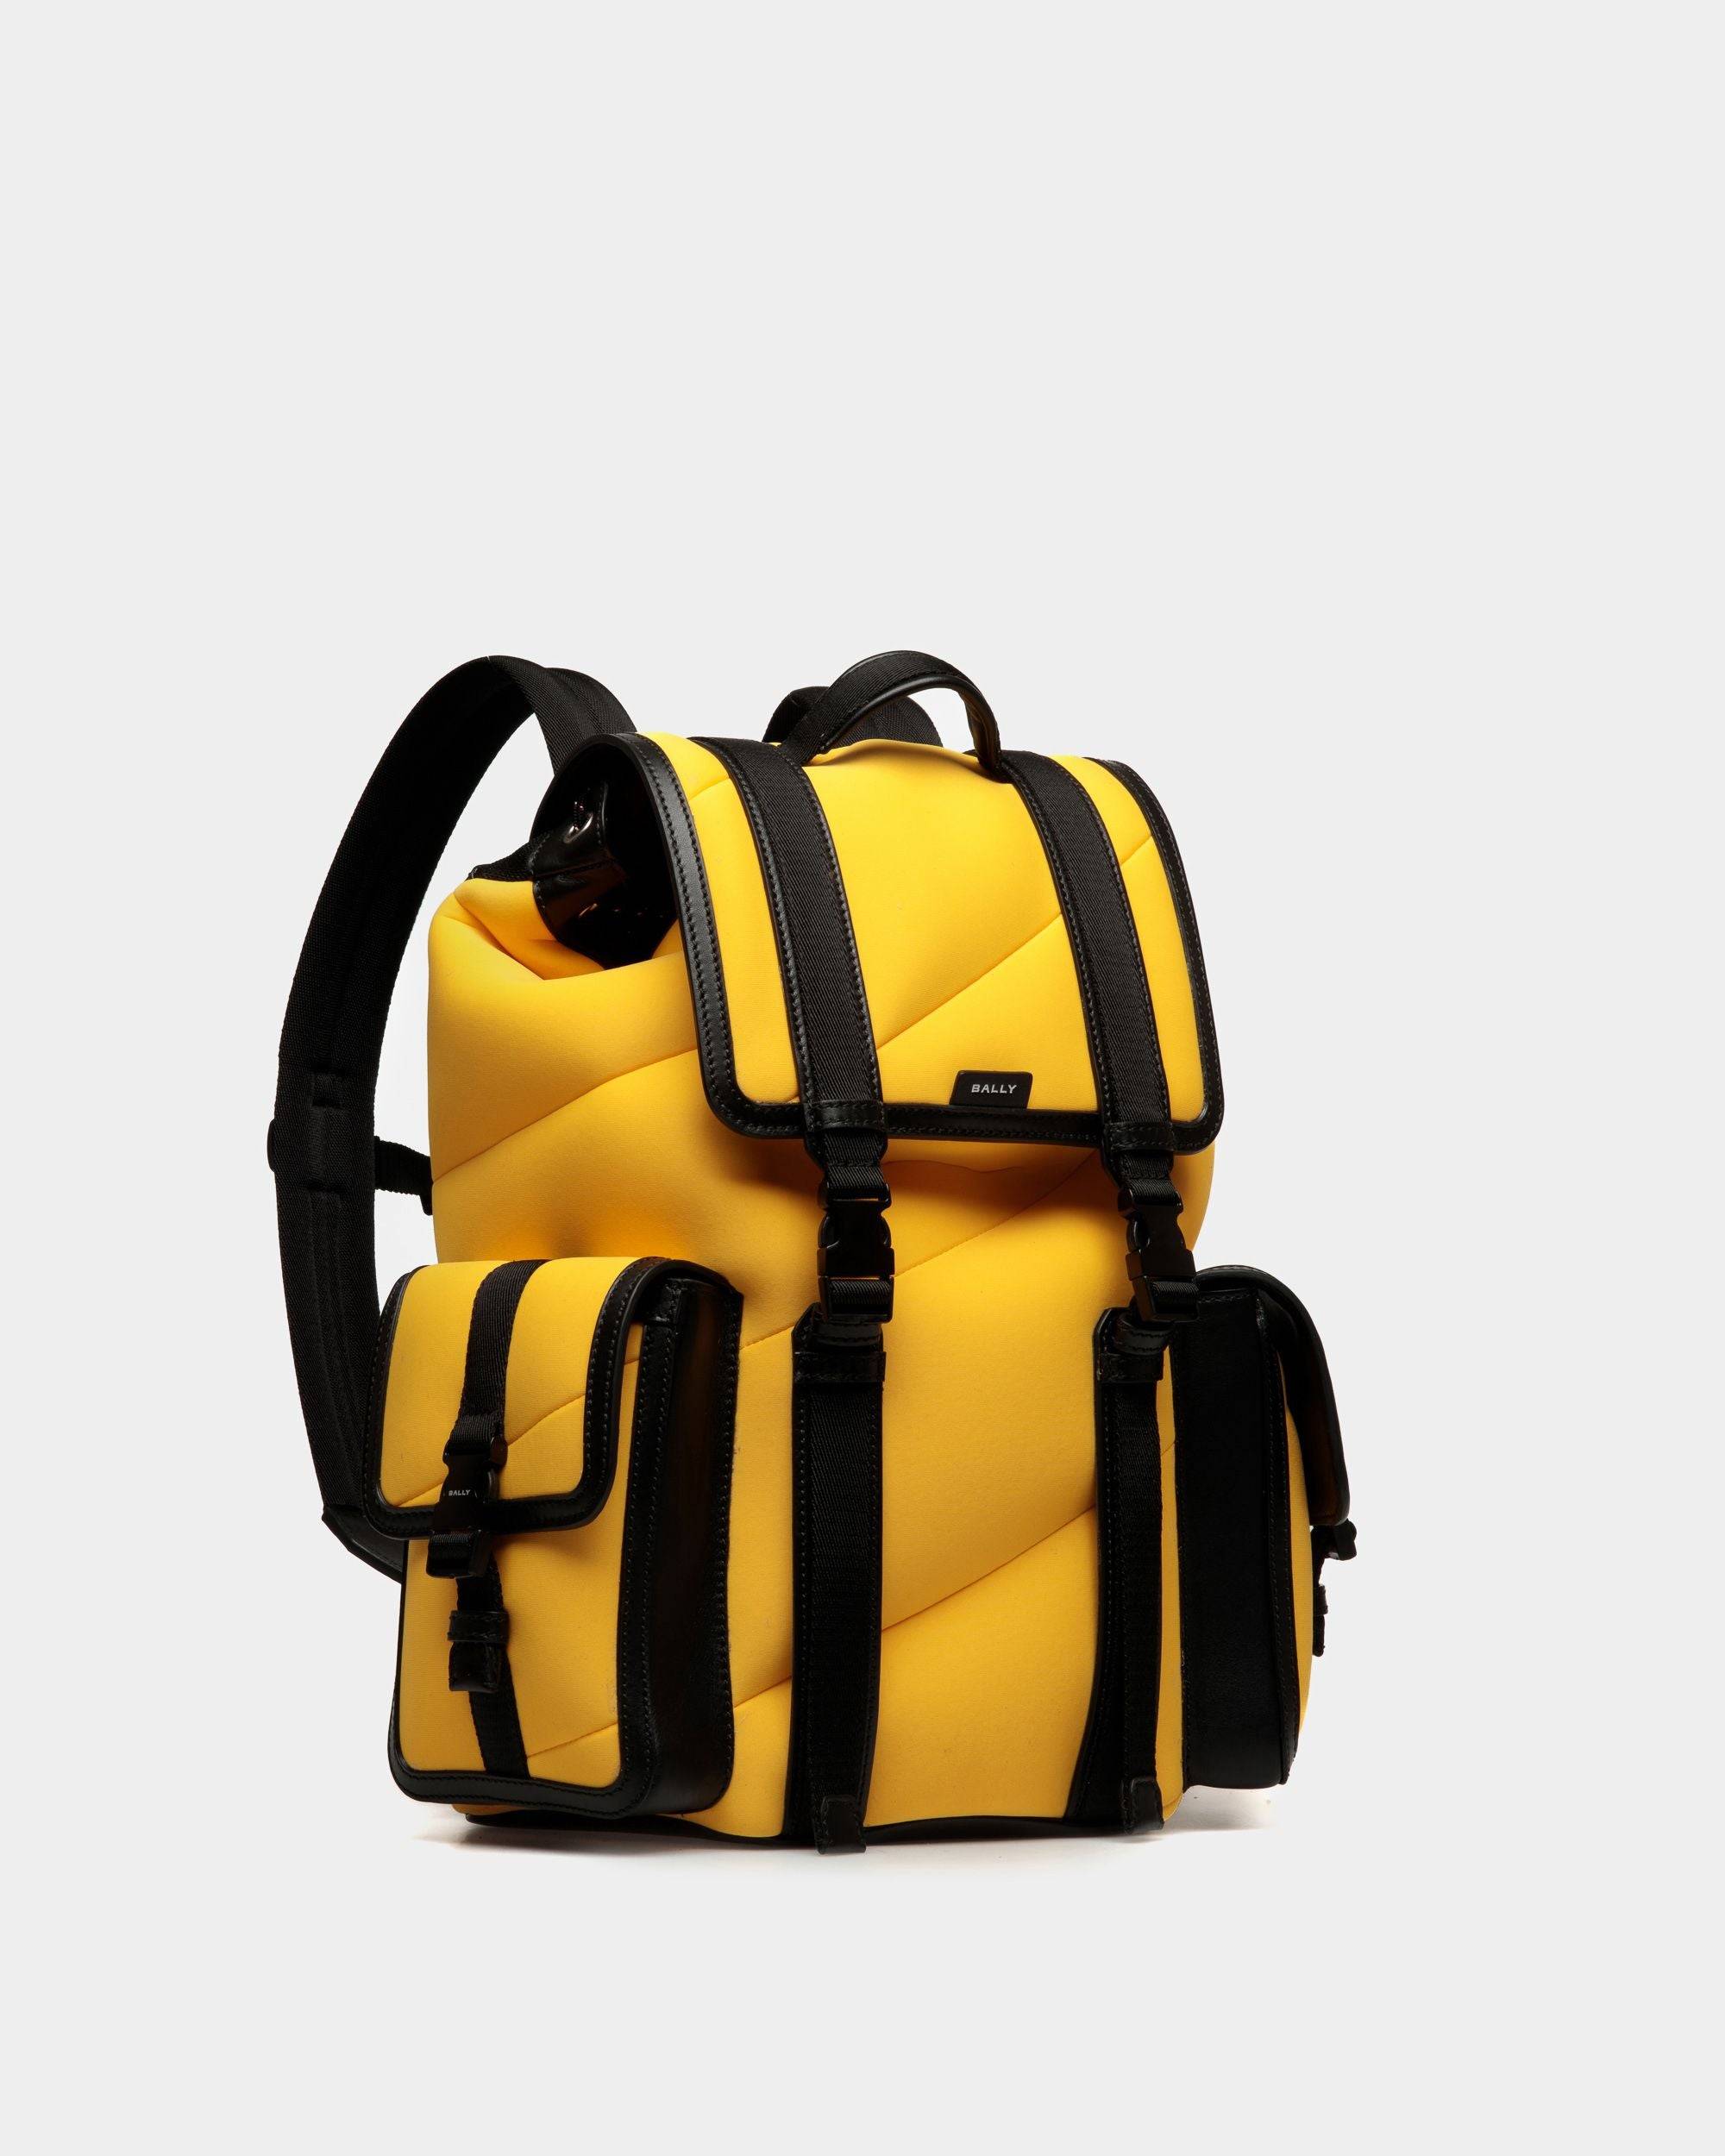 Mountain | Men's Backpack in Yellow Neoprene | Bally | Still Life 3/4 Front